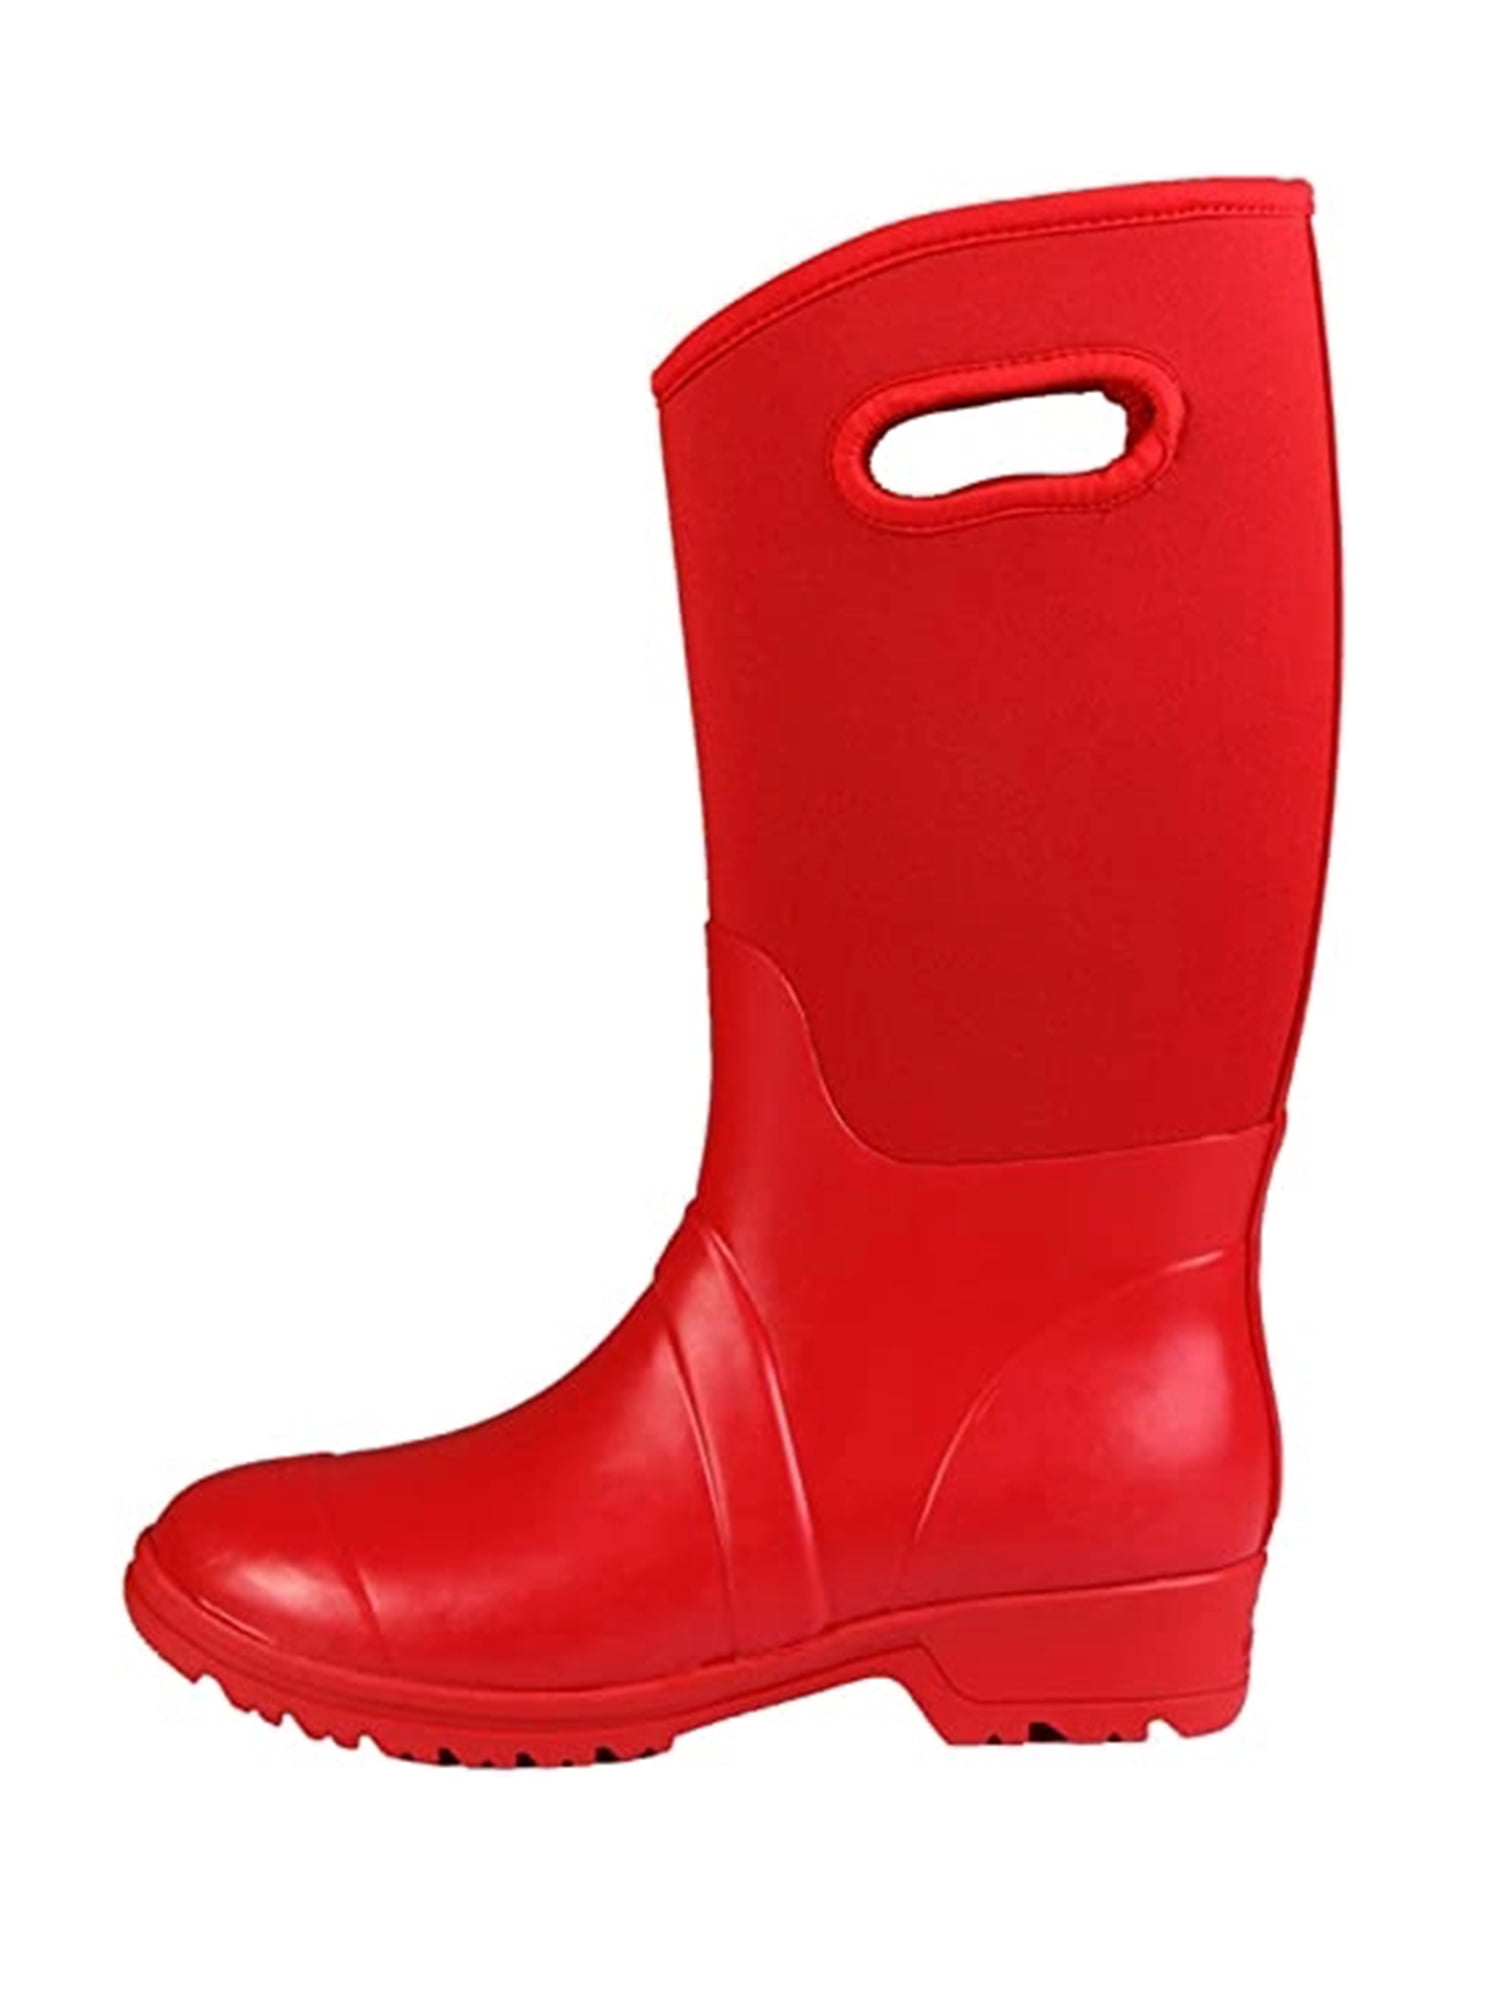 slip resistant rain boots walmart